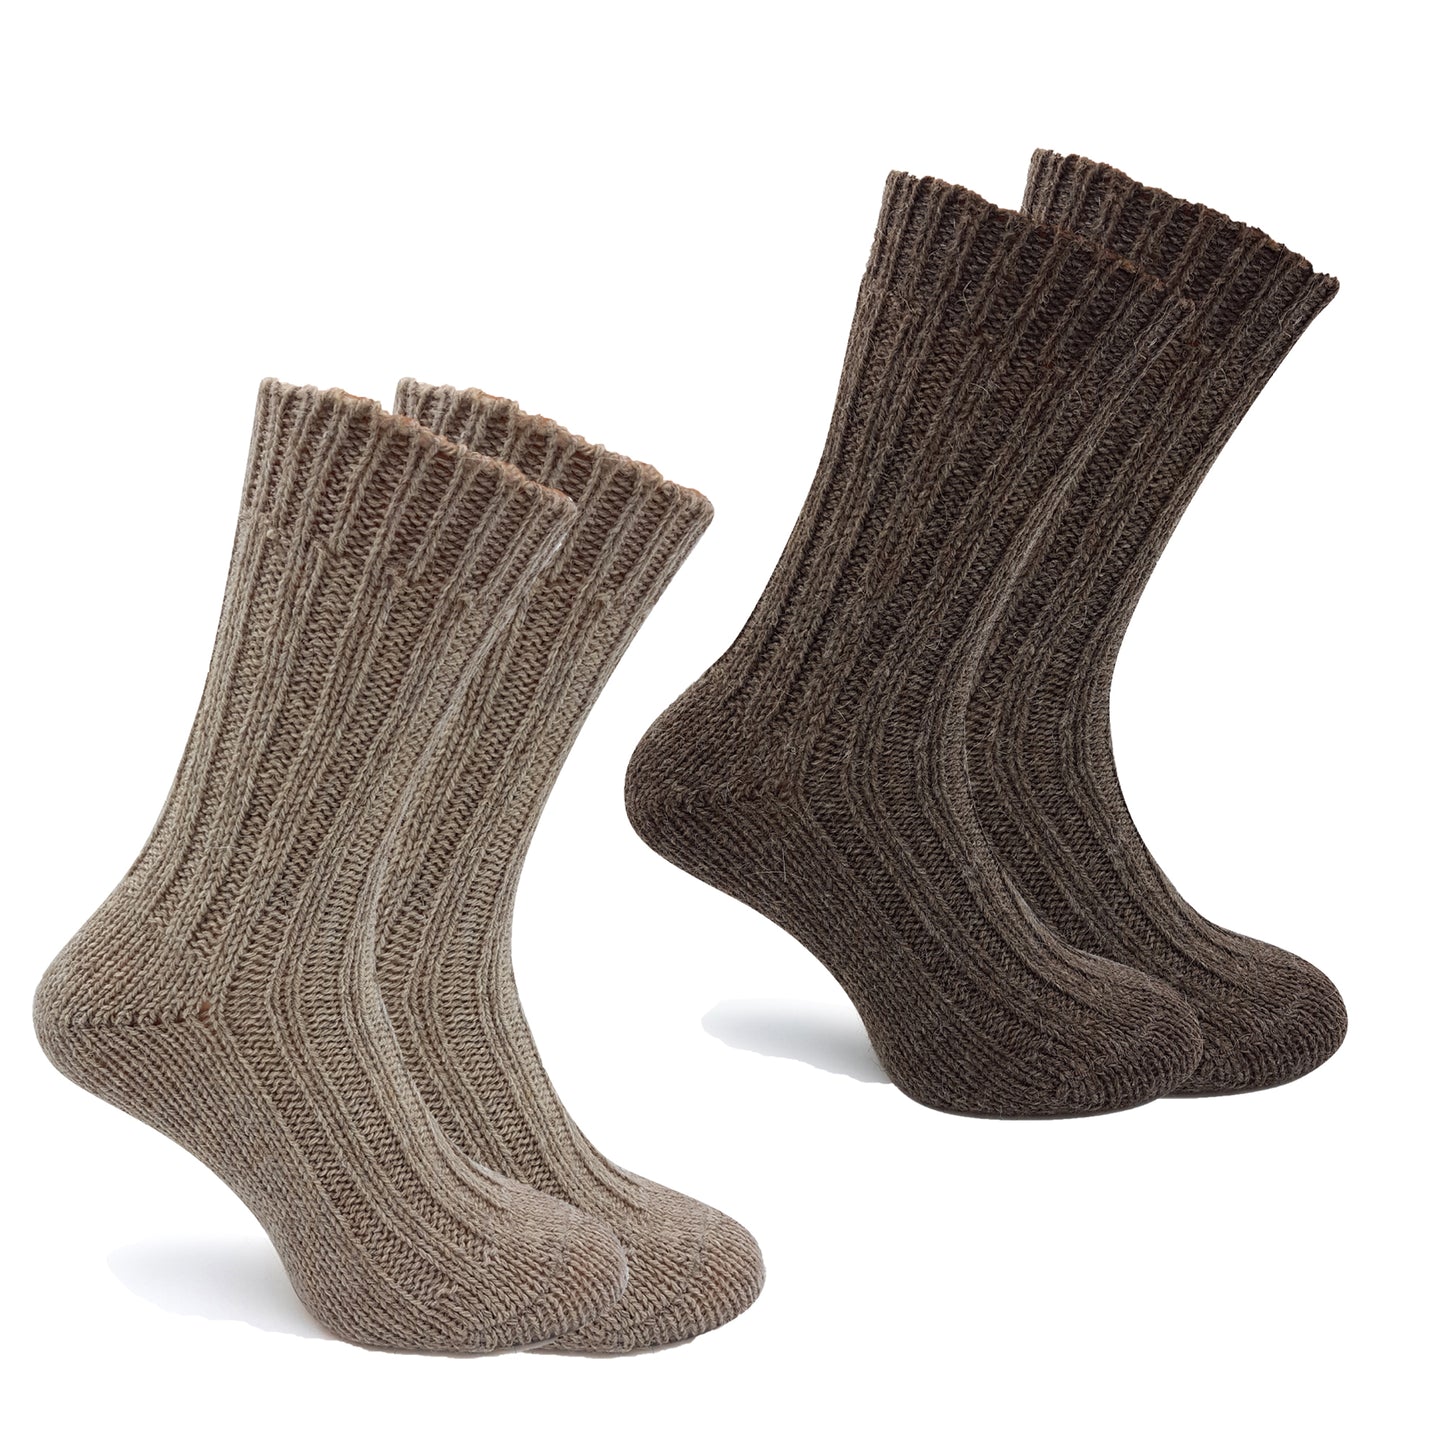 Alpaka Socken, Wollsocken (2 Paar) - Strick (Beige/Braun)